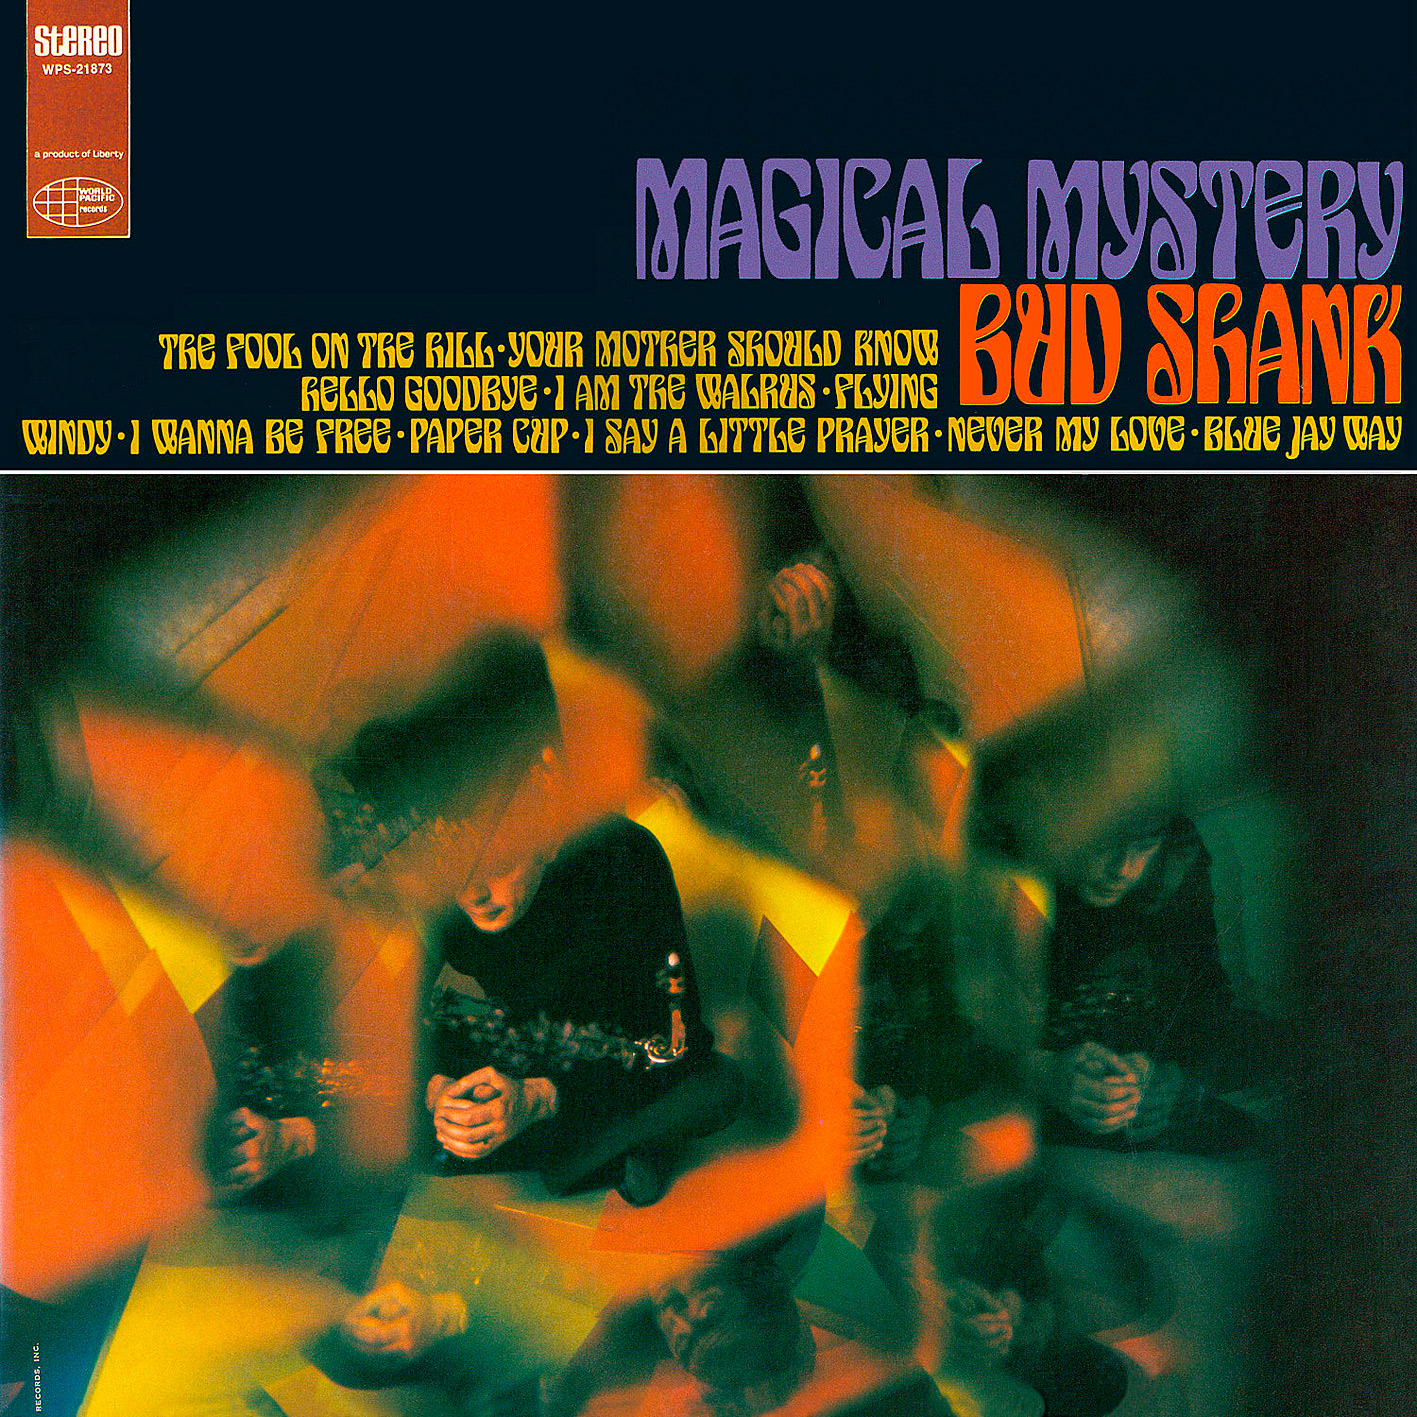 Bud Shank – Magical Mystery (1968/2015) [HDTracks FLAC 24bit/96kHz]